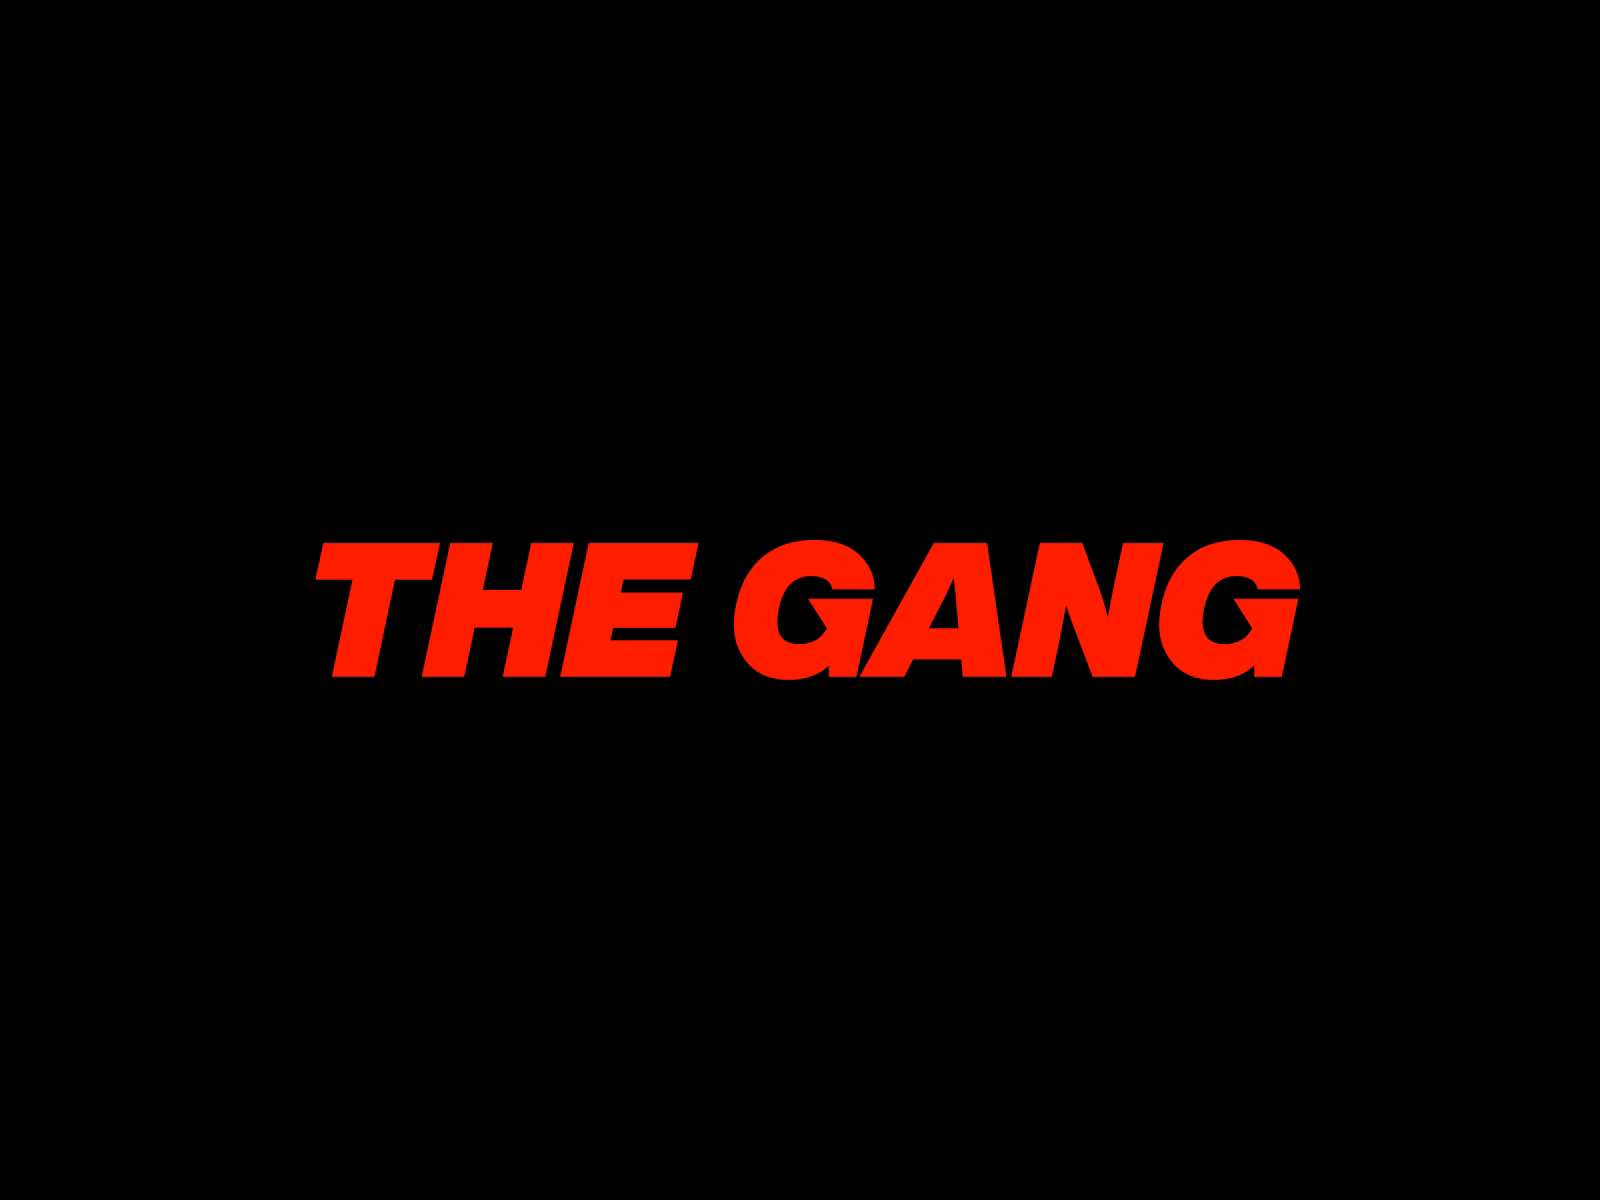 The Gang: Logo by Erdem Tonyalı for creathive on Dribbble